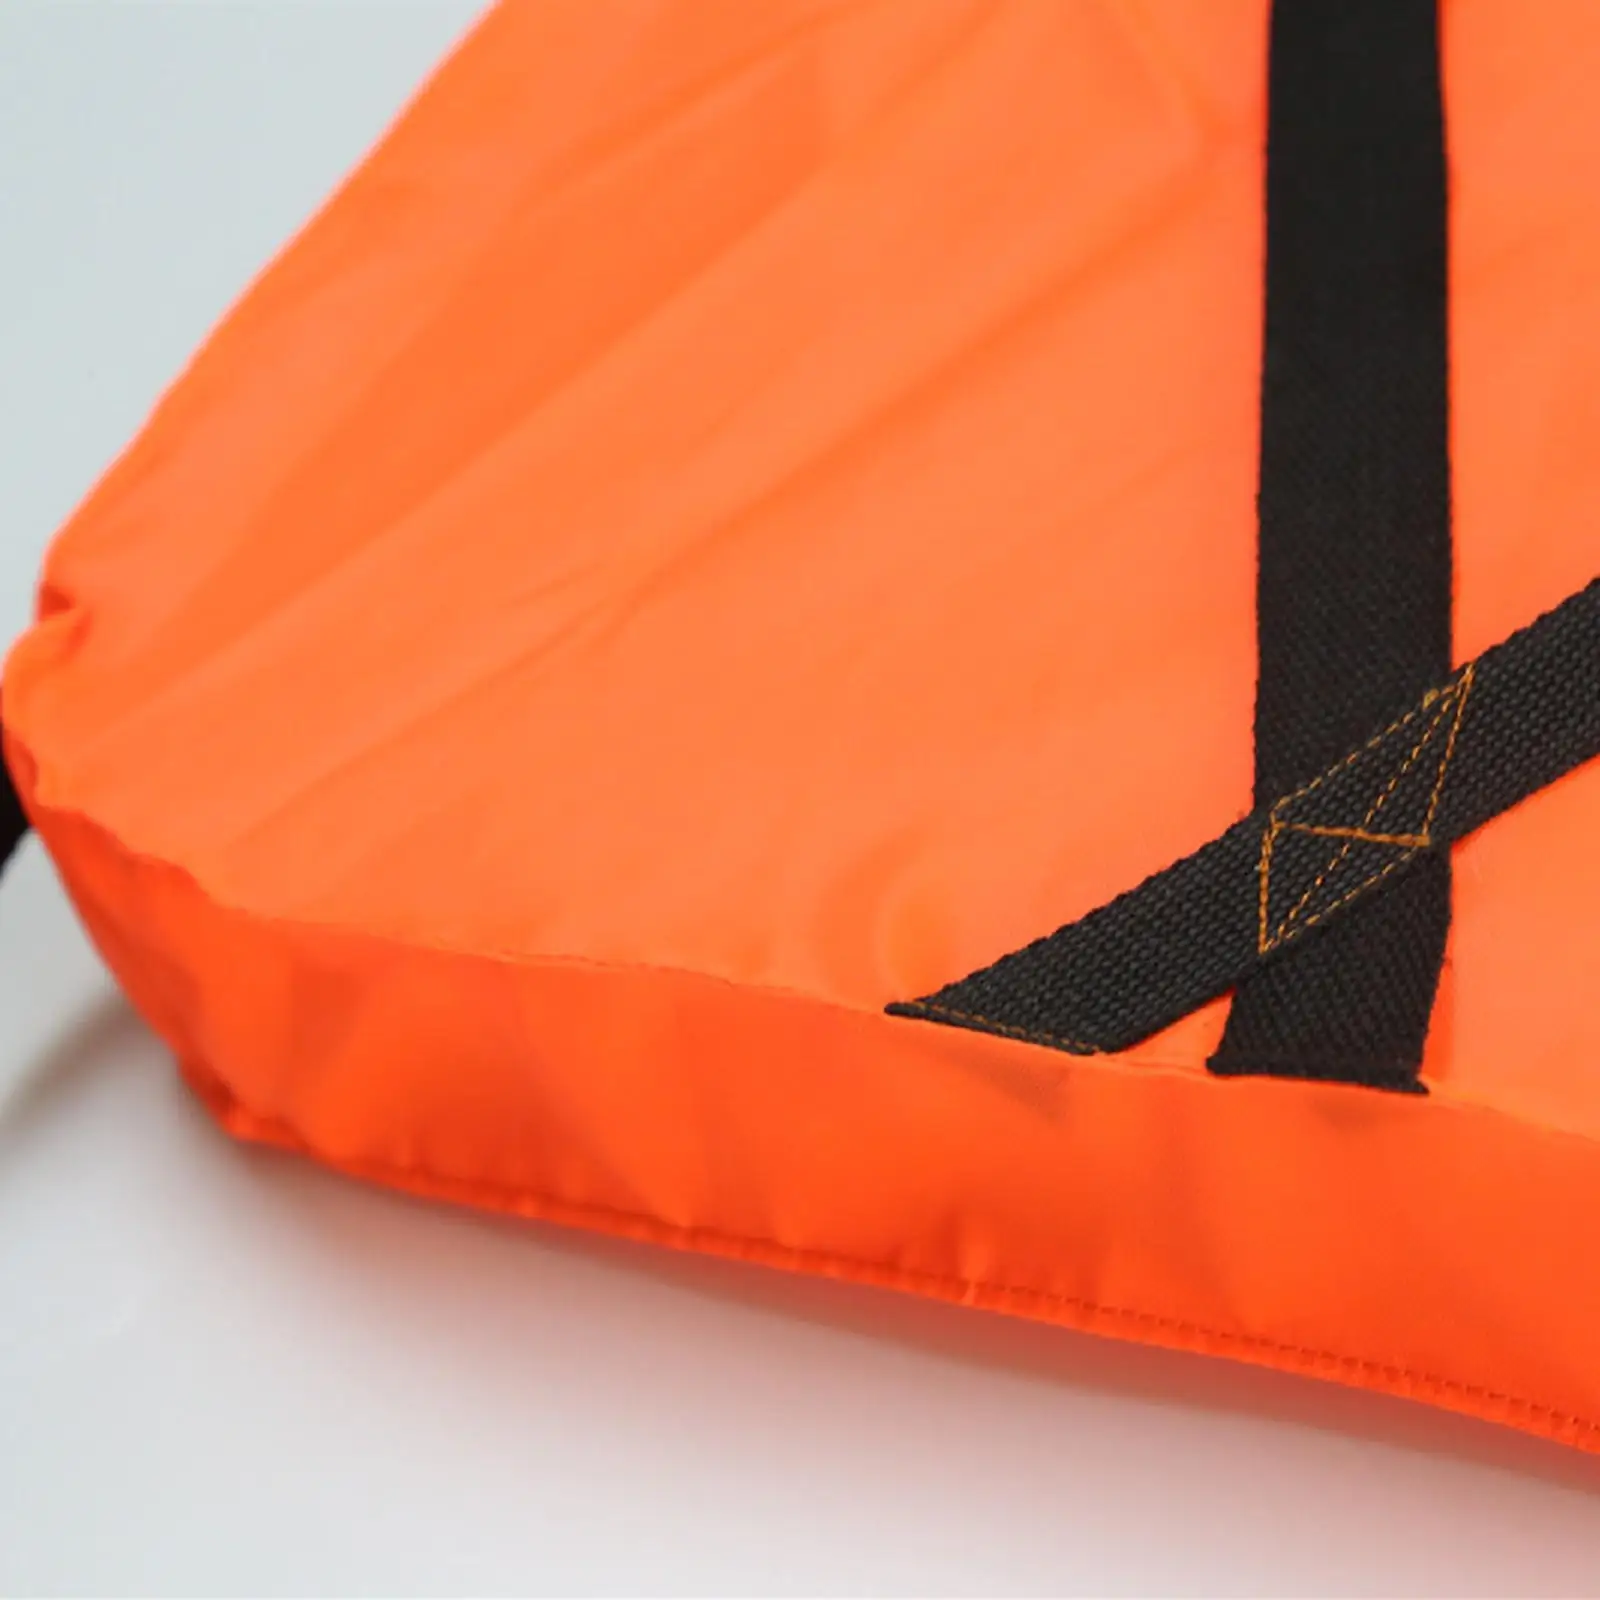 Emergency Marine Flotation Cushion for Swimming, Throw Boat Cushion, Durable